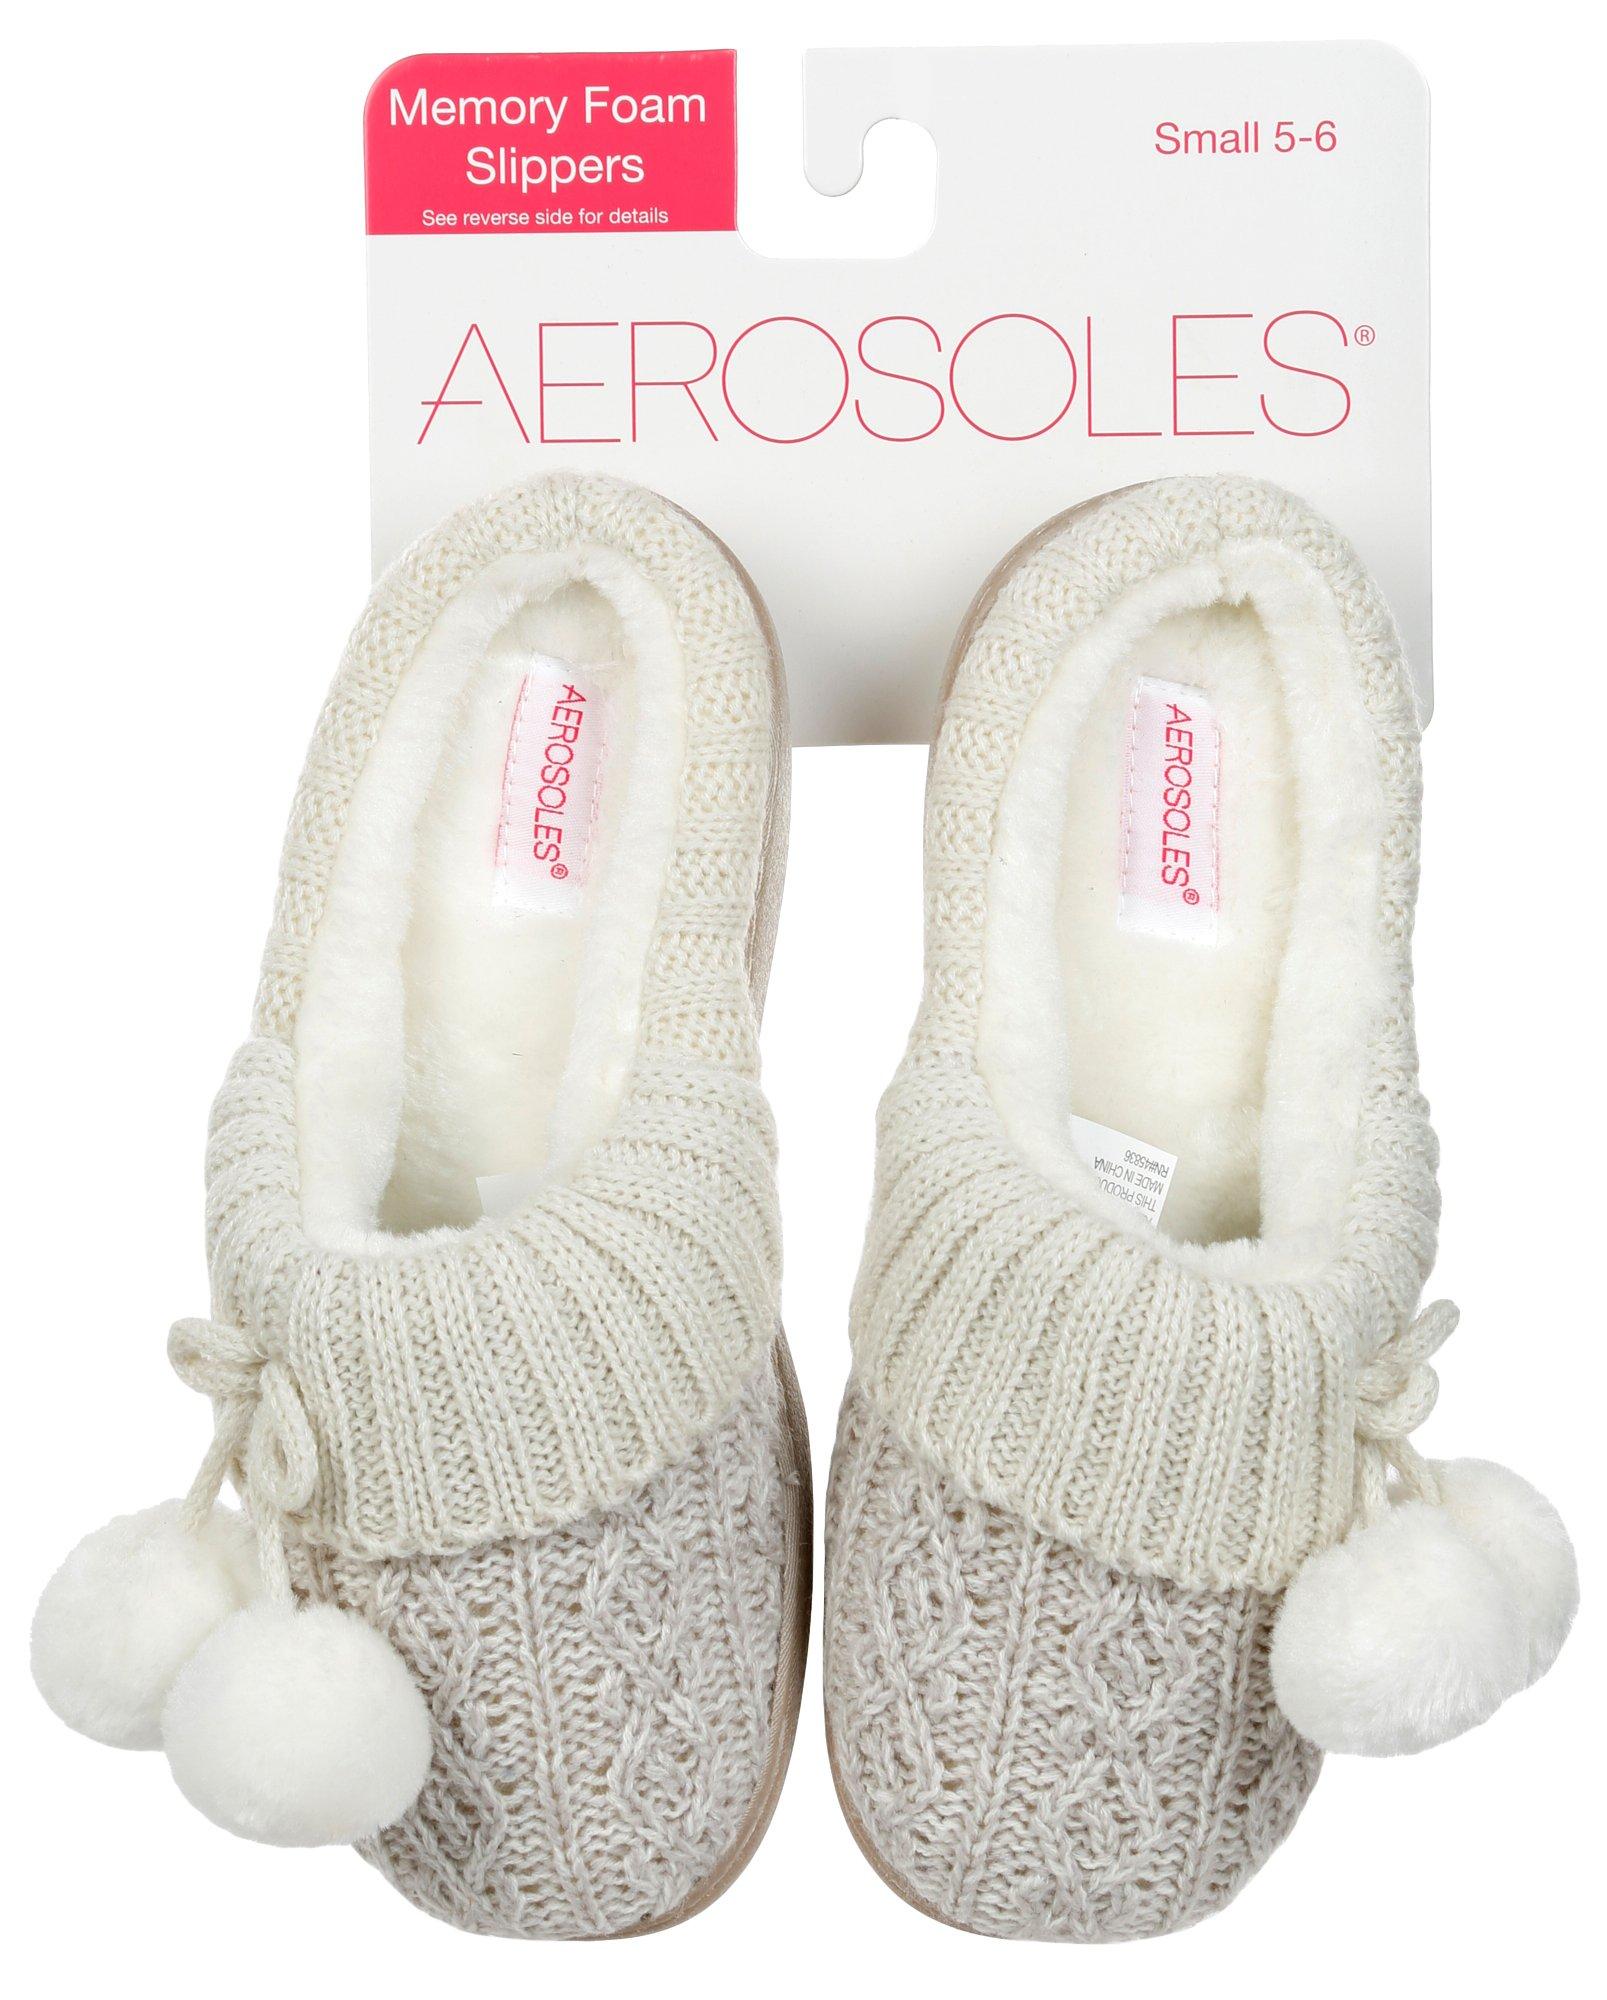 aerosoles memory foam slippers